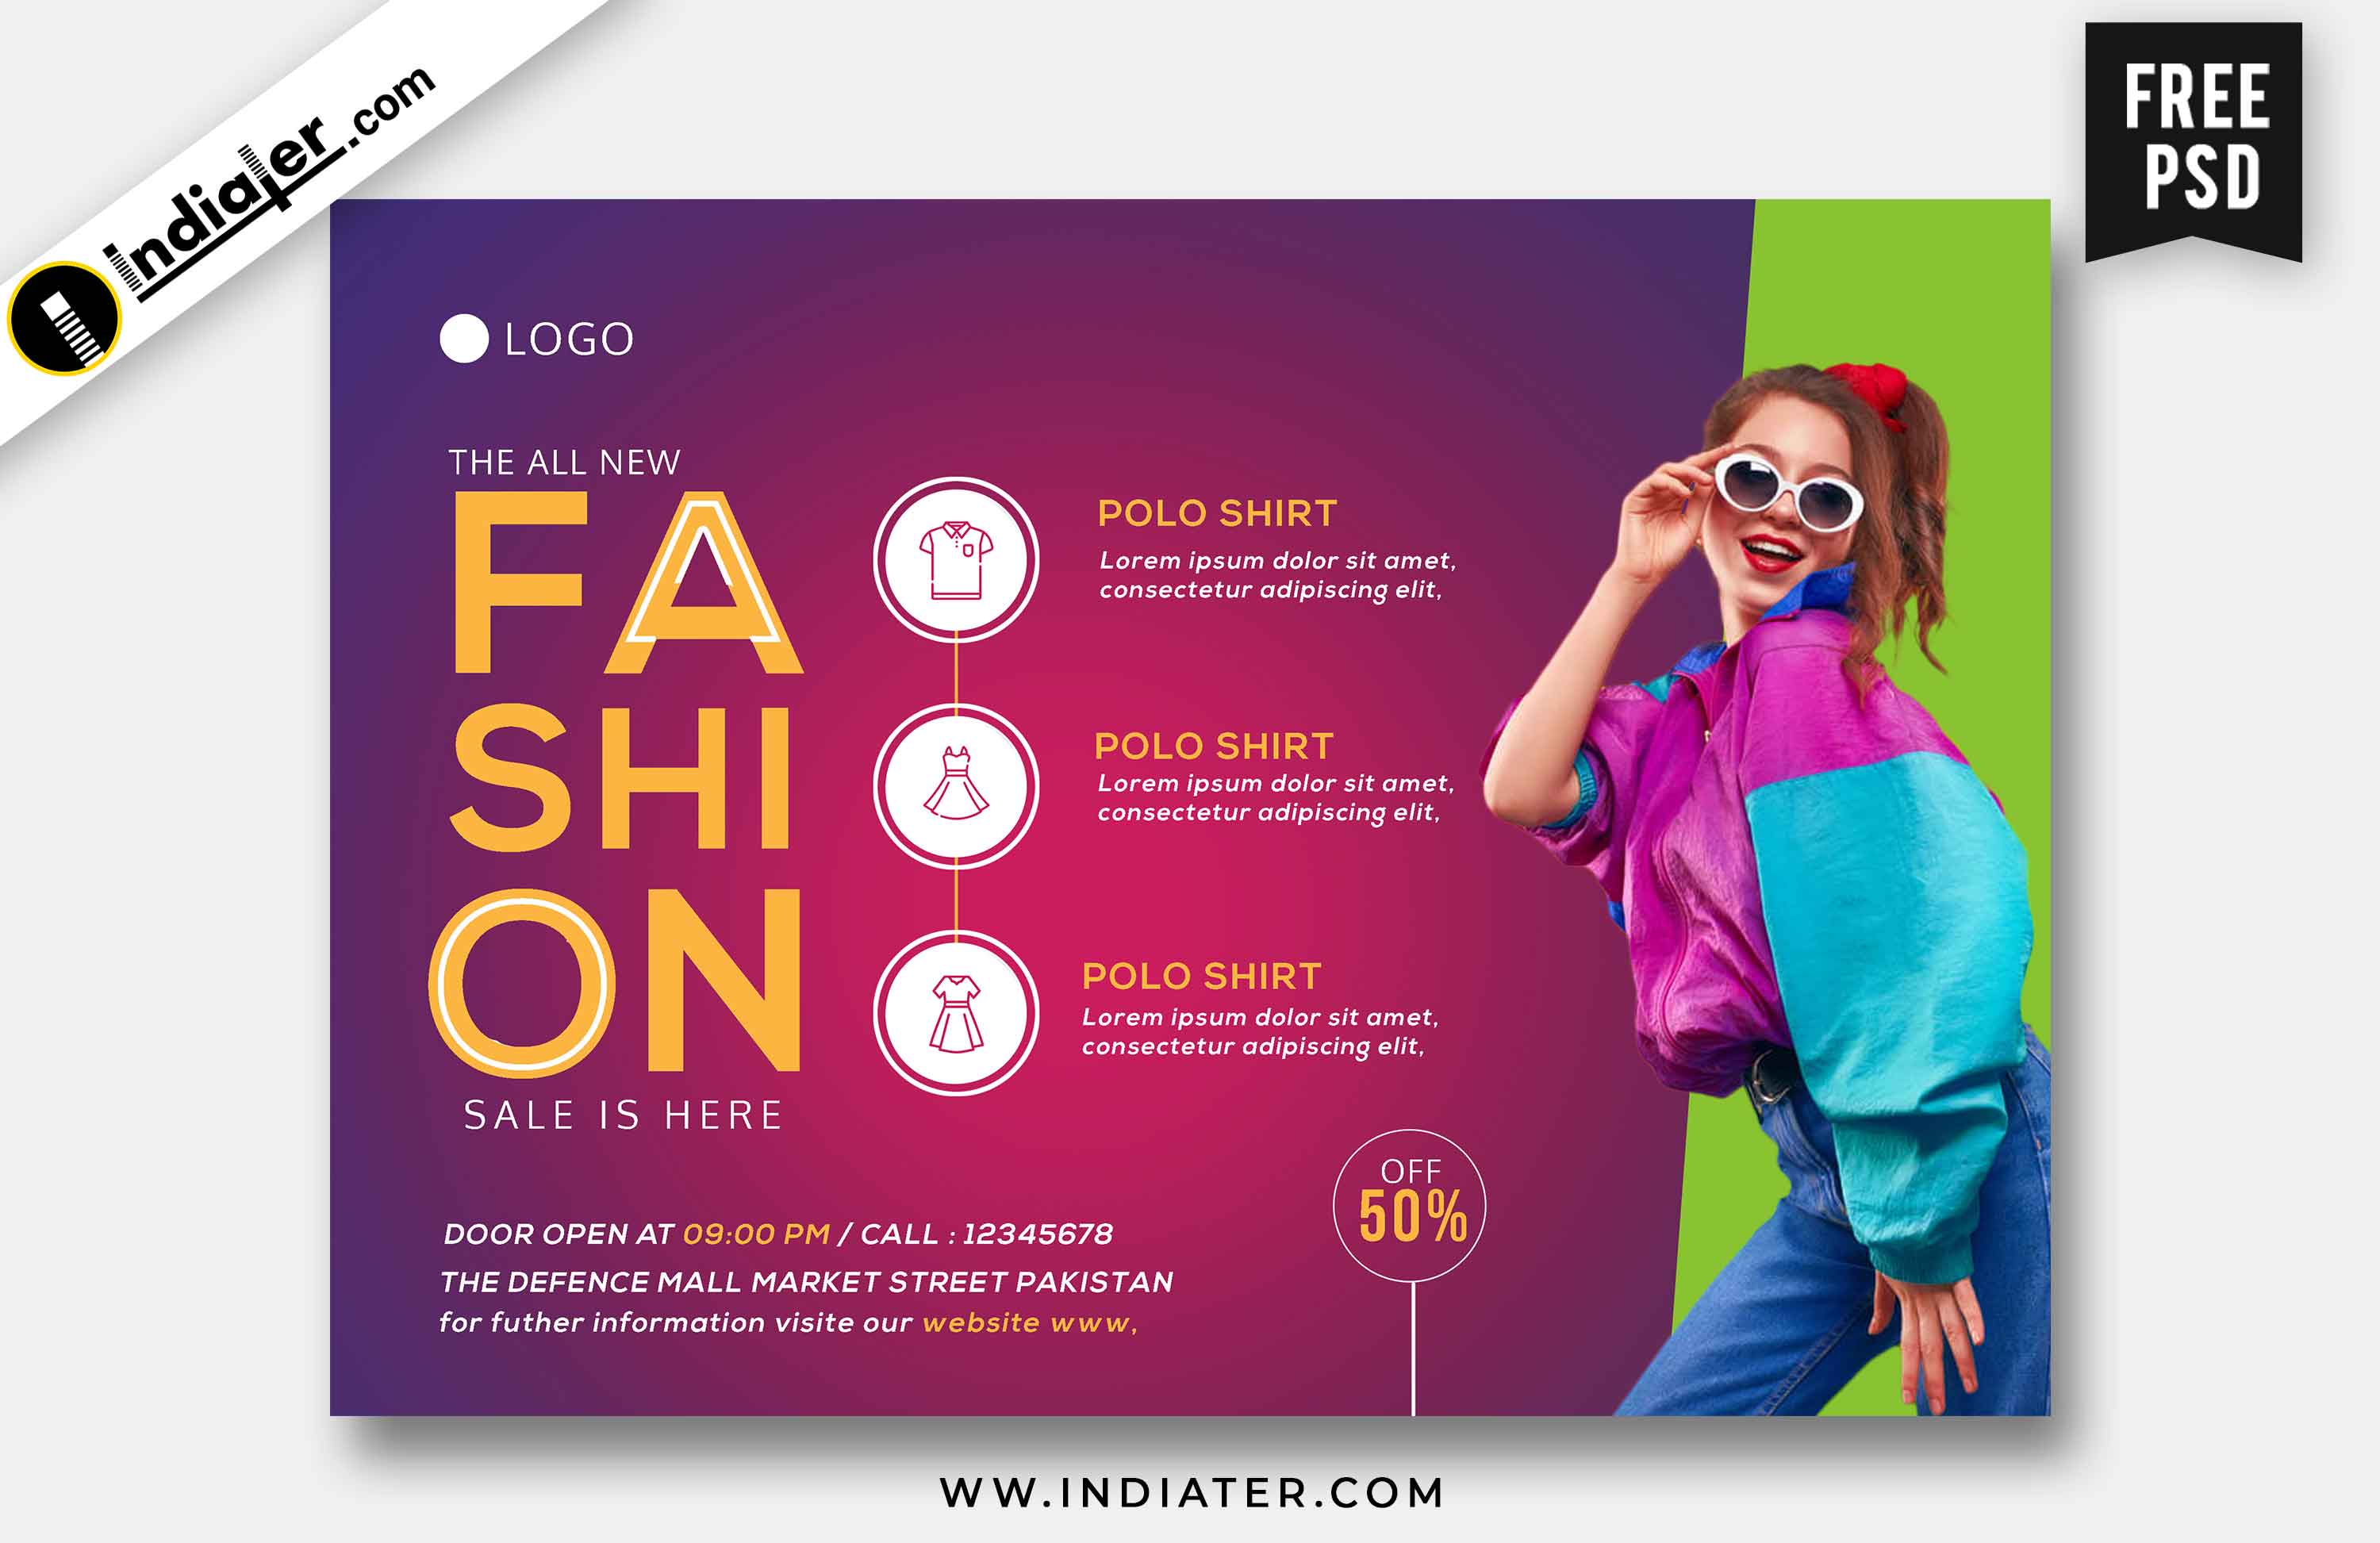 Fashion Sale Flyer Template Free PSD